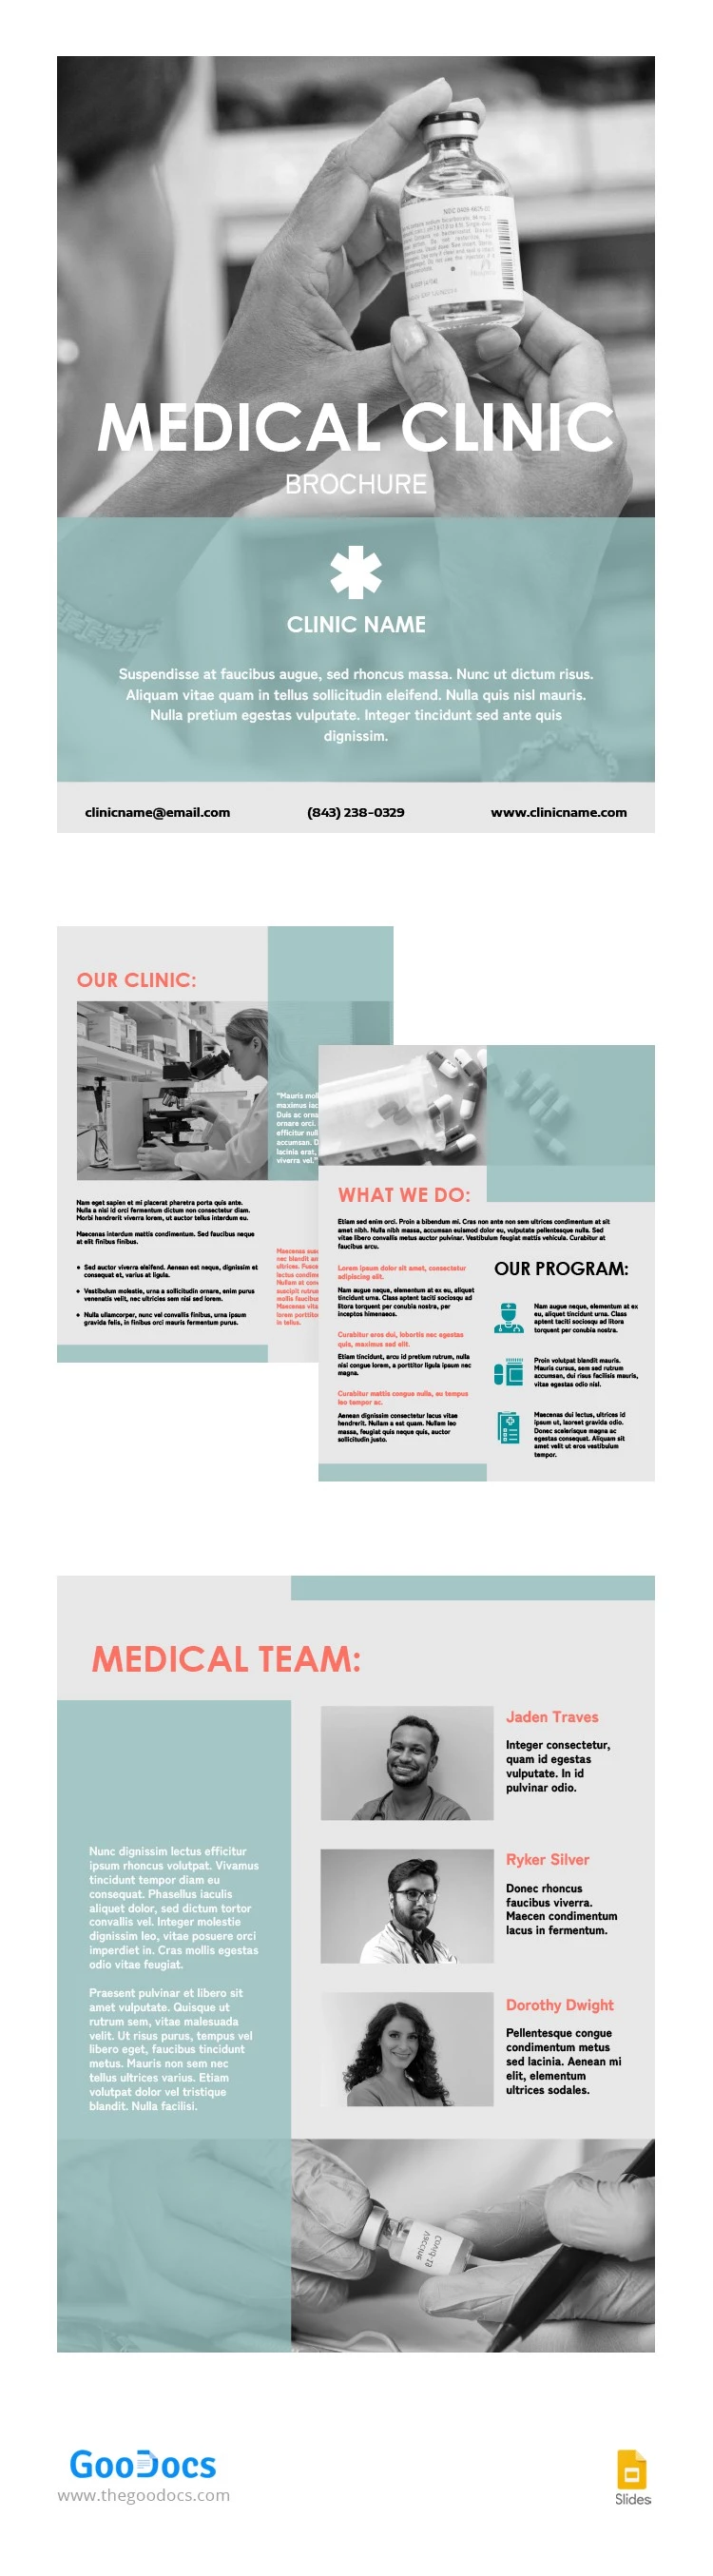 Brochure medica verde - free Google Docs Template - 10065696